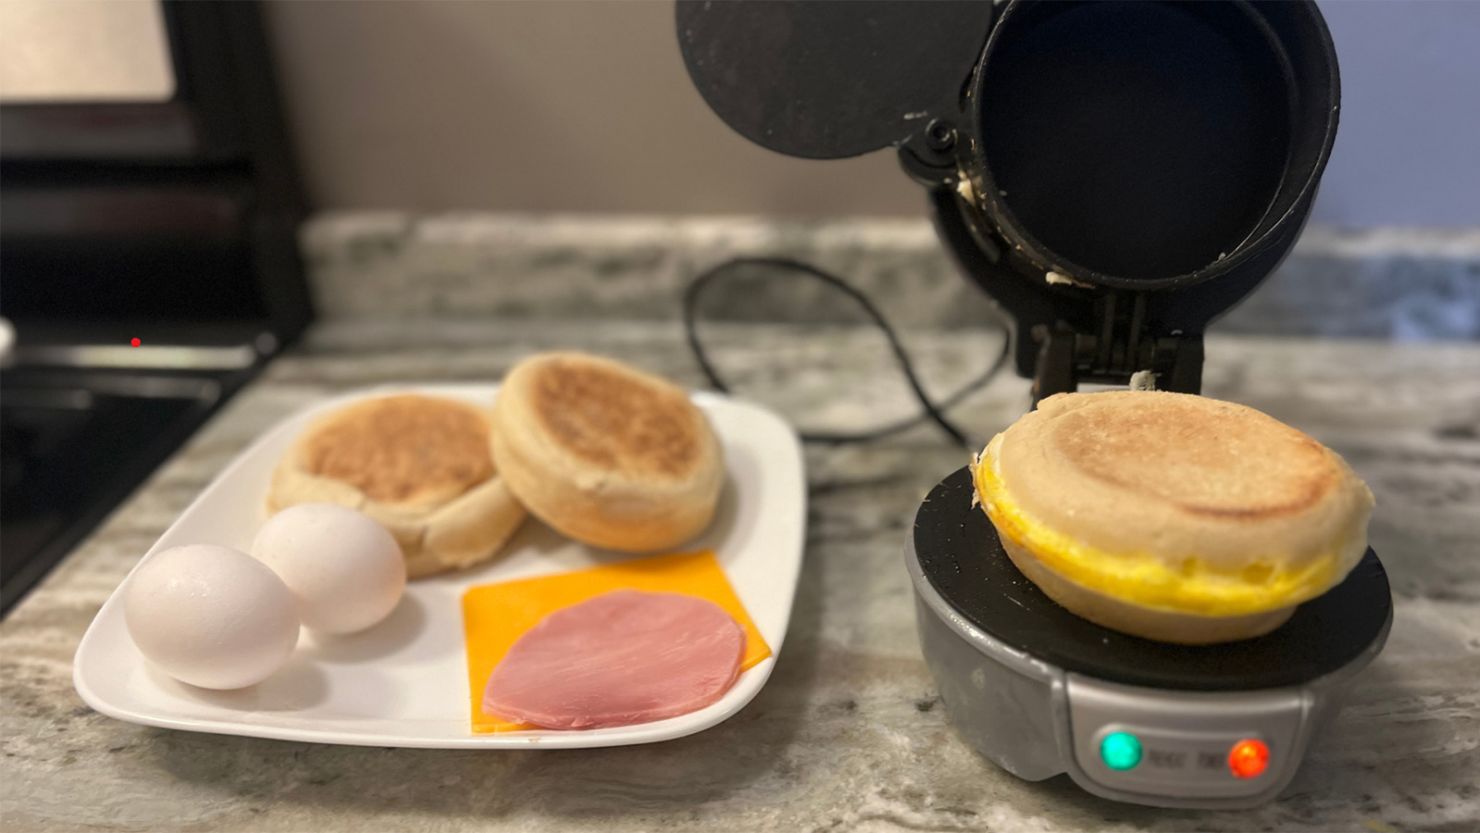 Hamilton Beach Breakfast Sandwich Maker Cookbook for Beginners